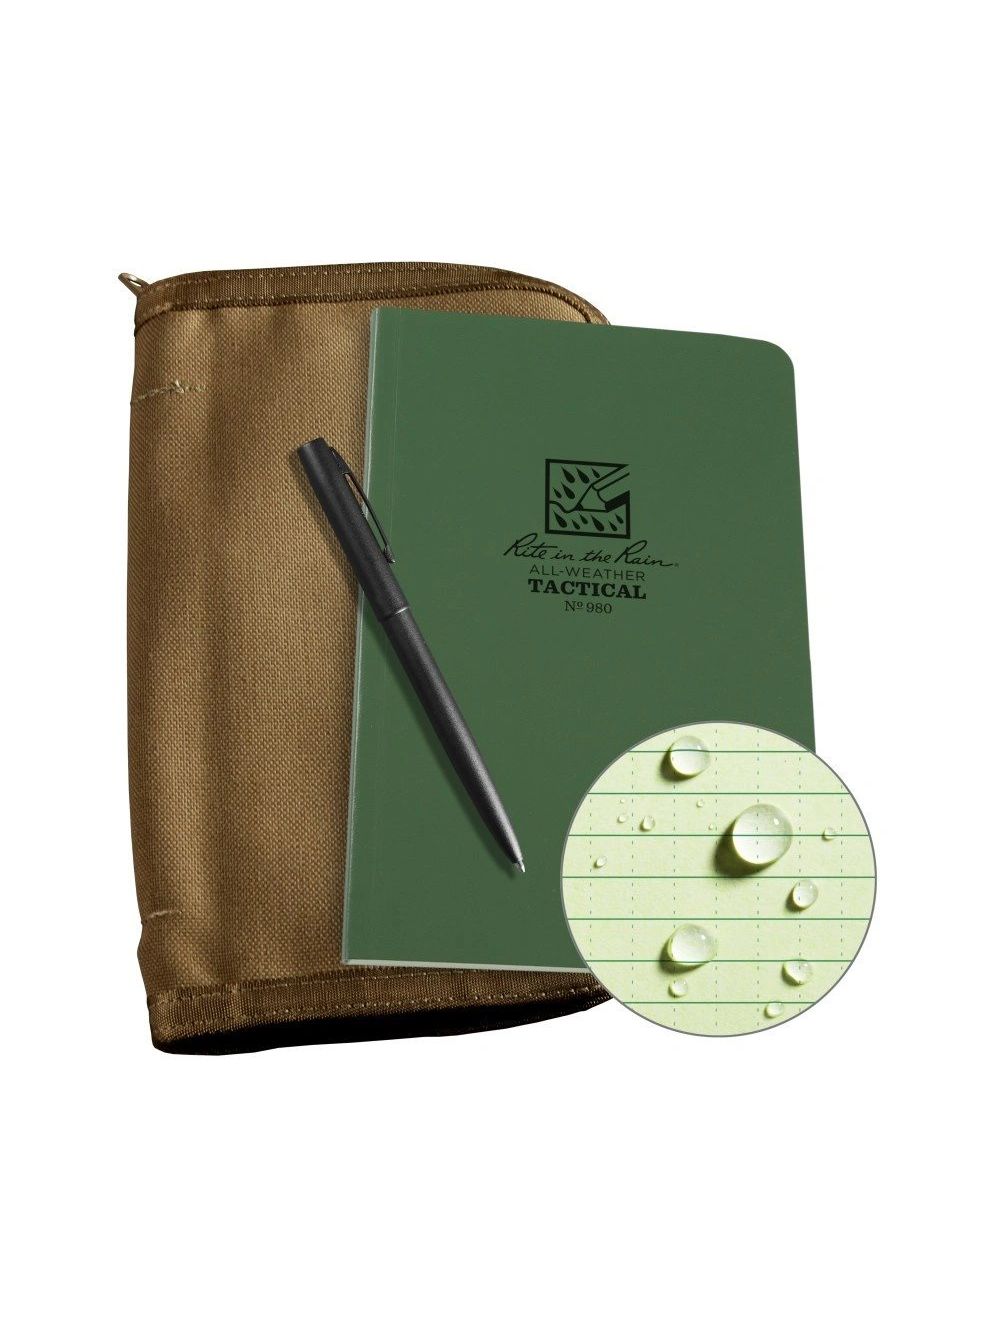 Field Book Kit - Green Book / Tan Cover